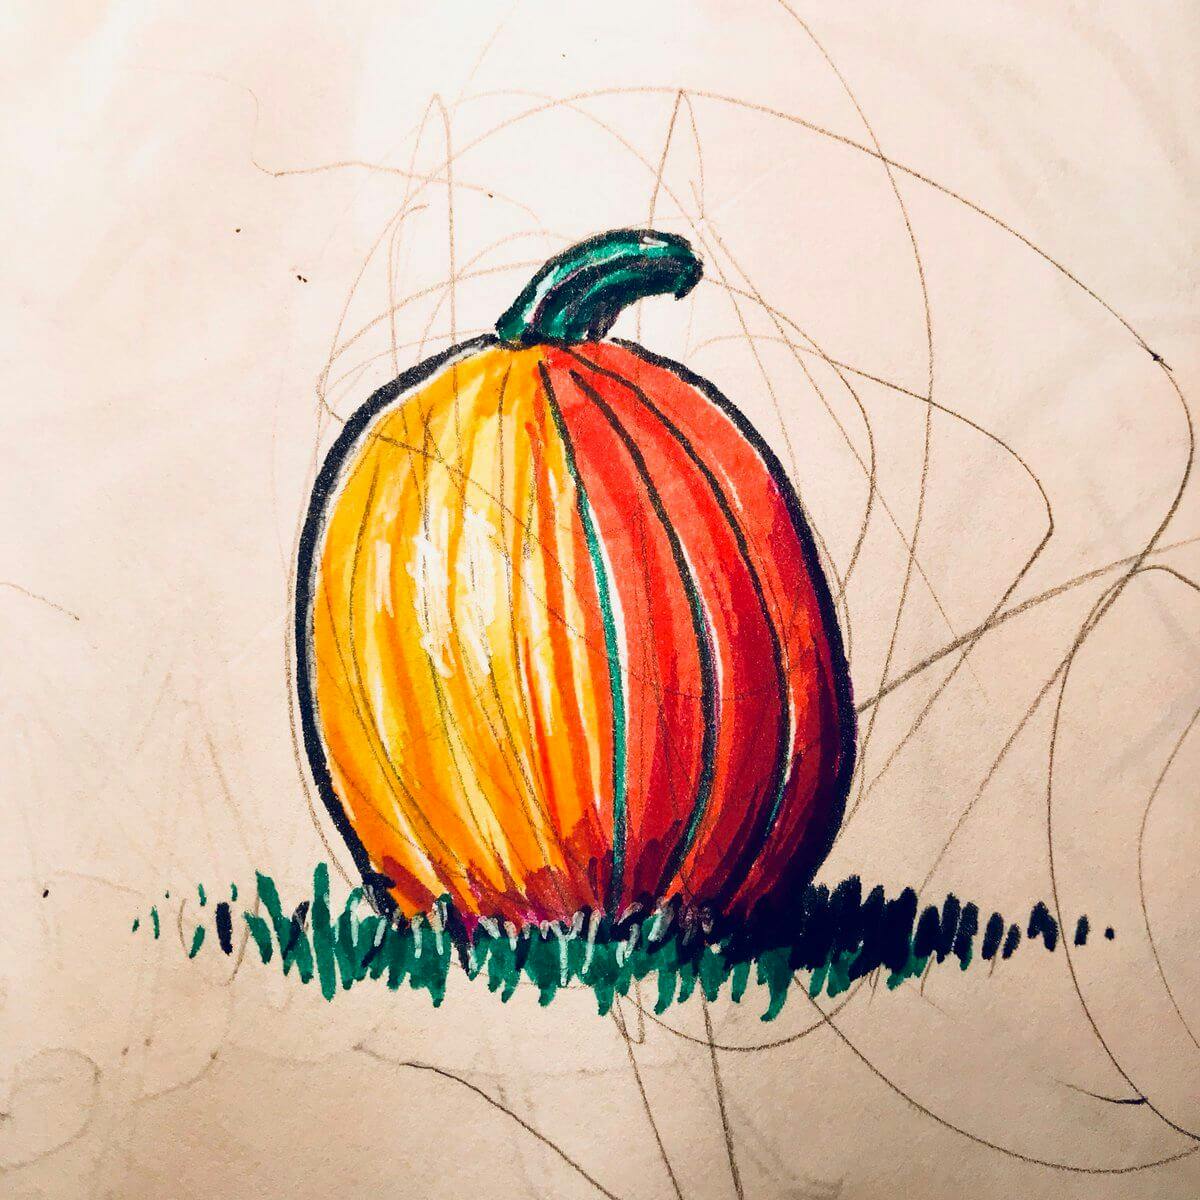 A pumpkin illustration